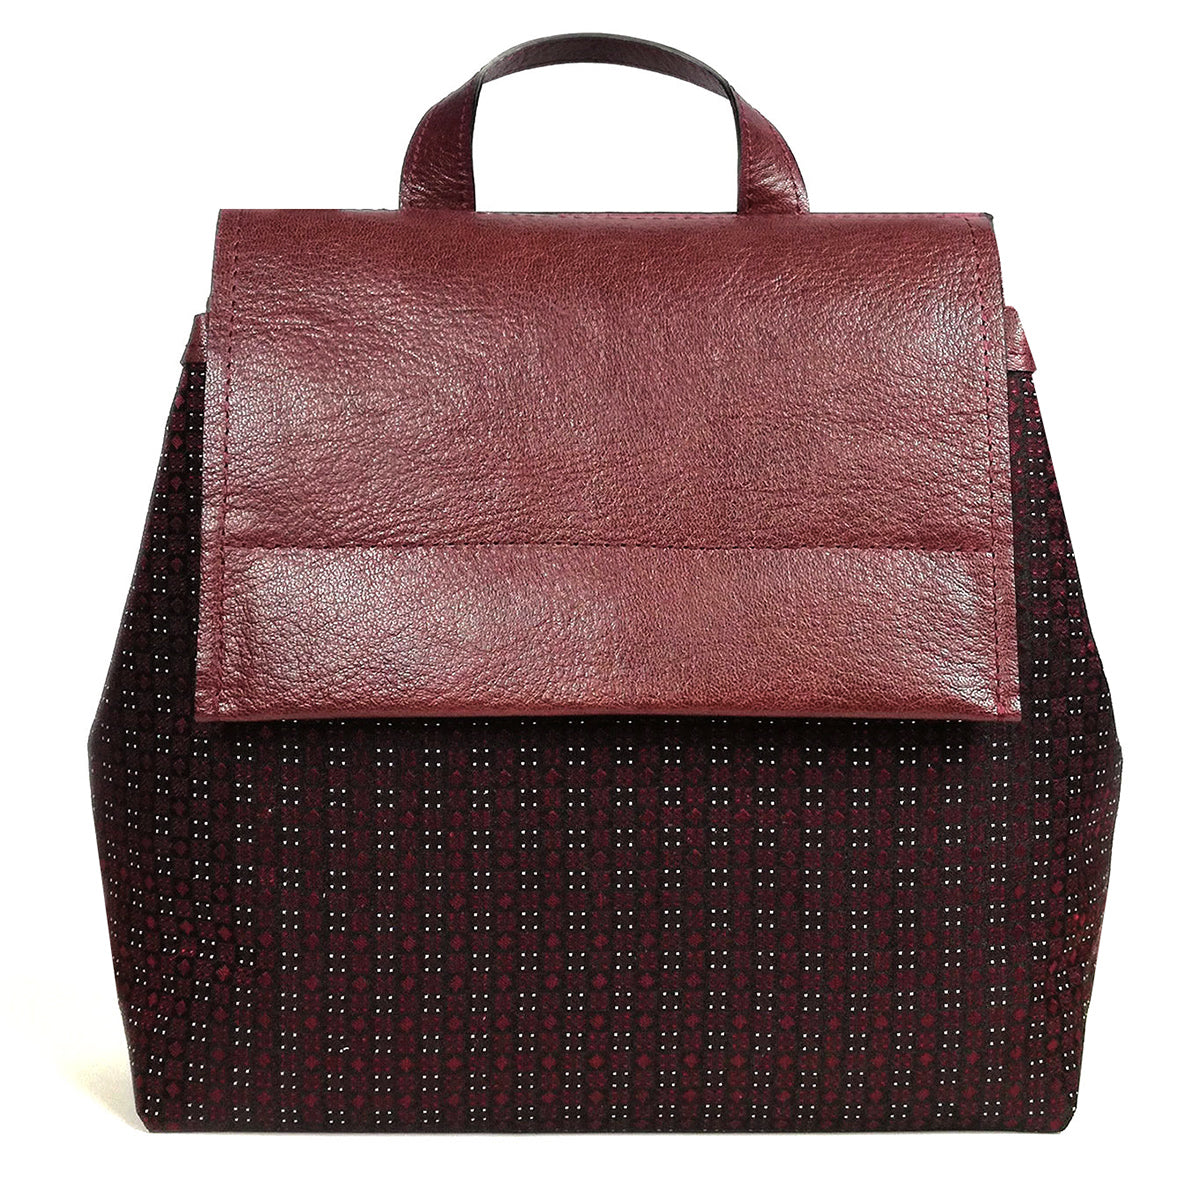 Burgundi leather and fabric backpack | Alice